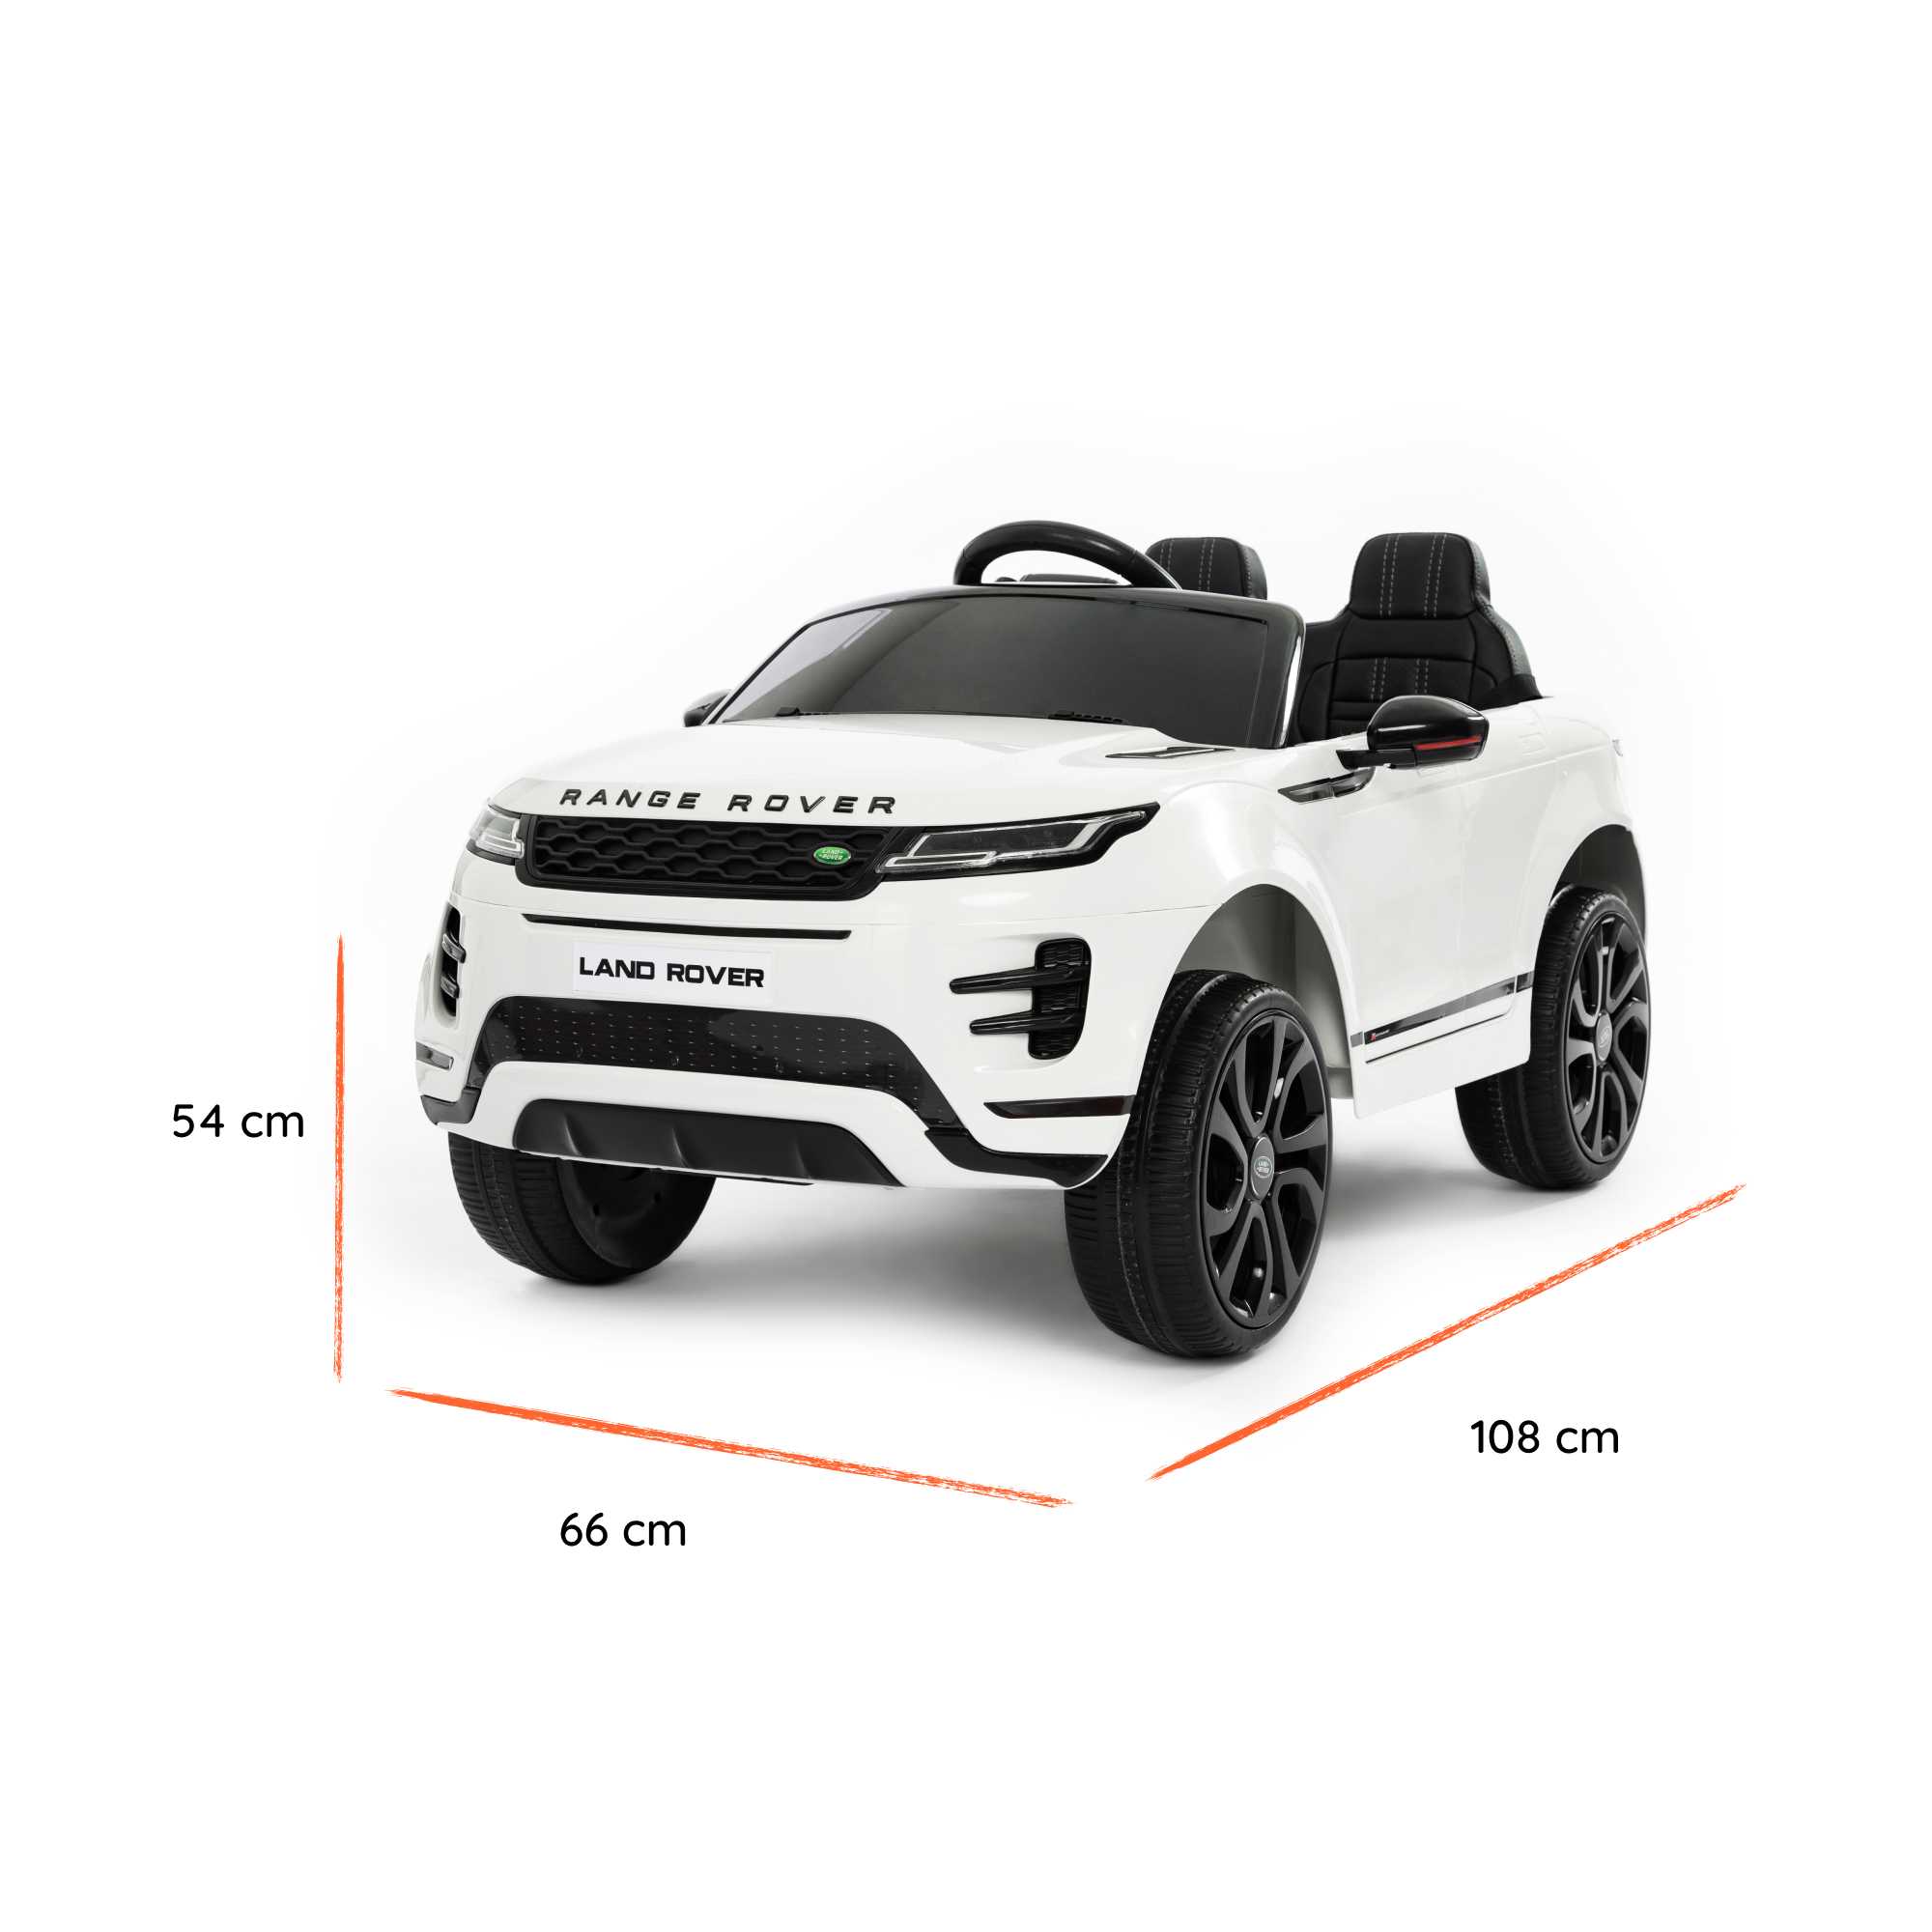 Range Rover Evoque blanc dimensions